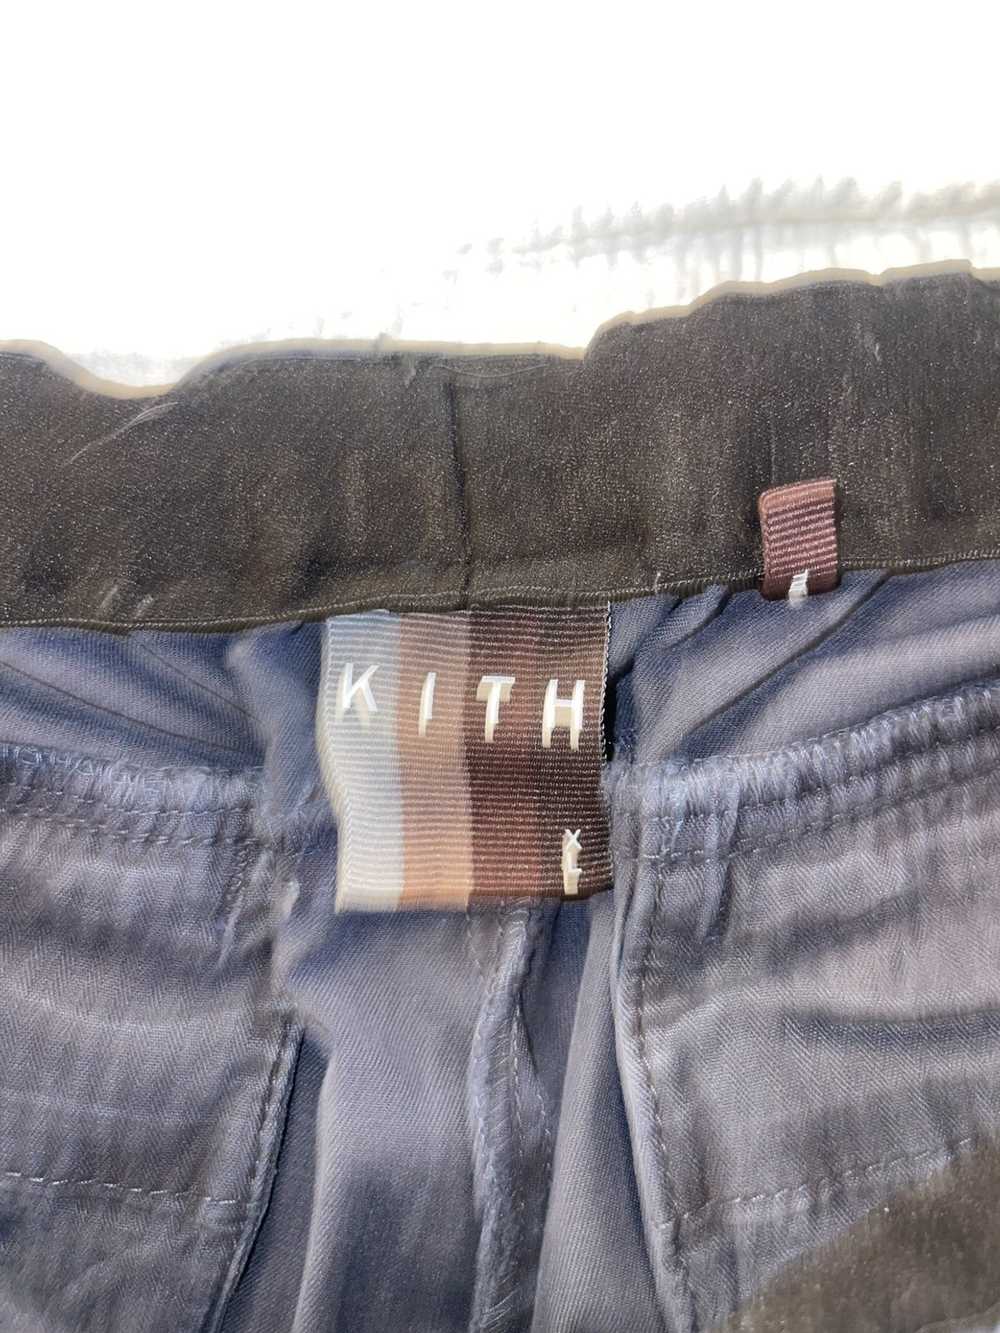 Kith Kith cargos pants - image 3